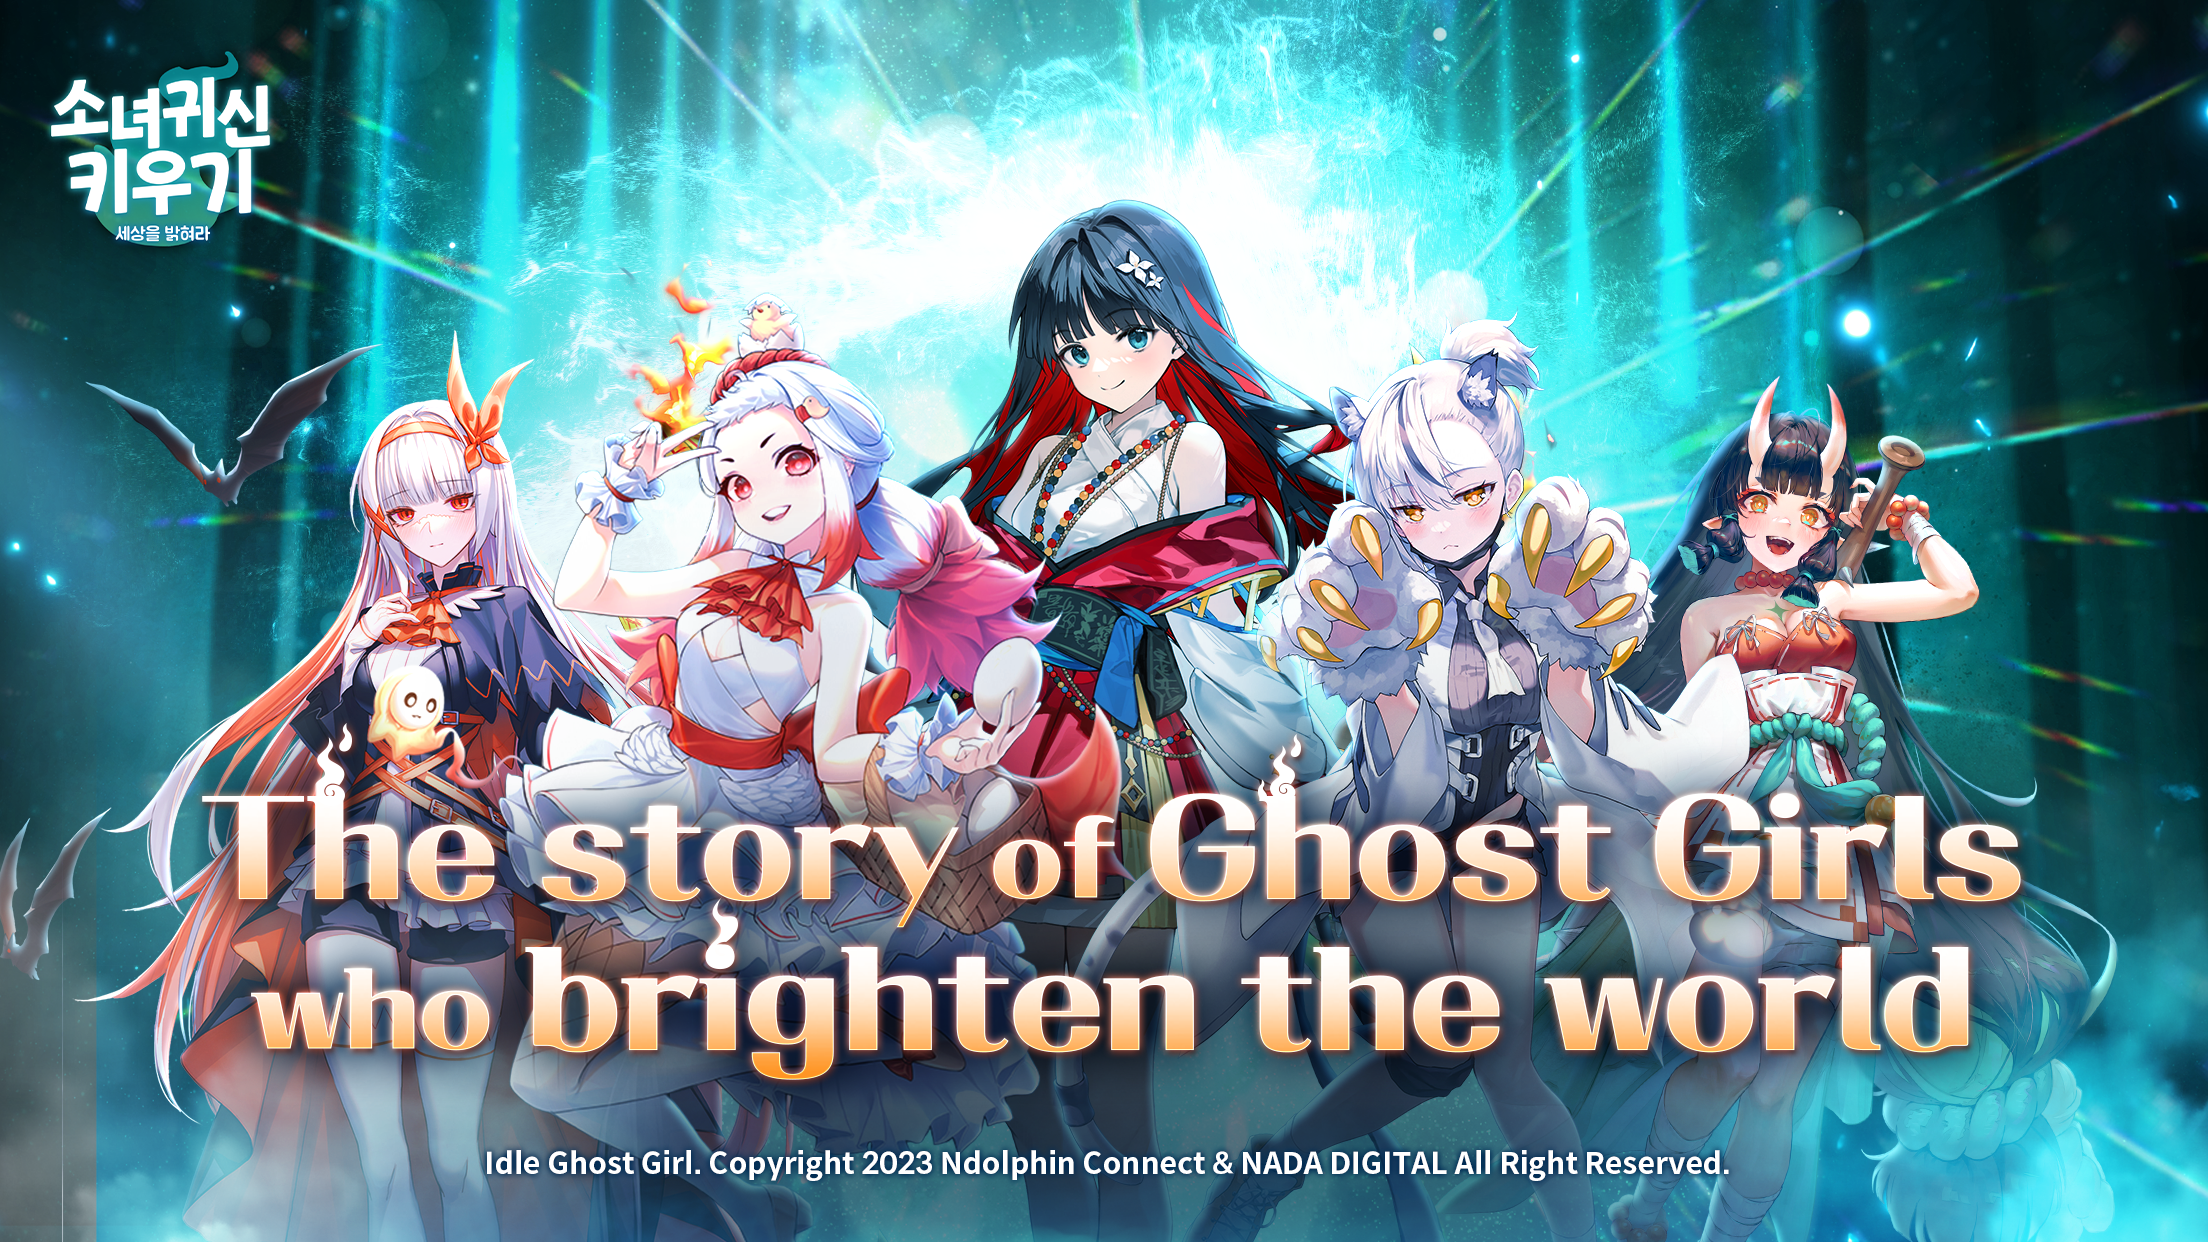 Idle Ghost Girl: AFK RPG ภาพหน้าจอเกม